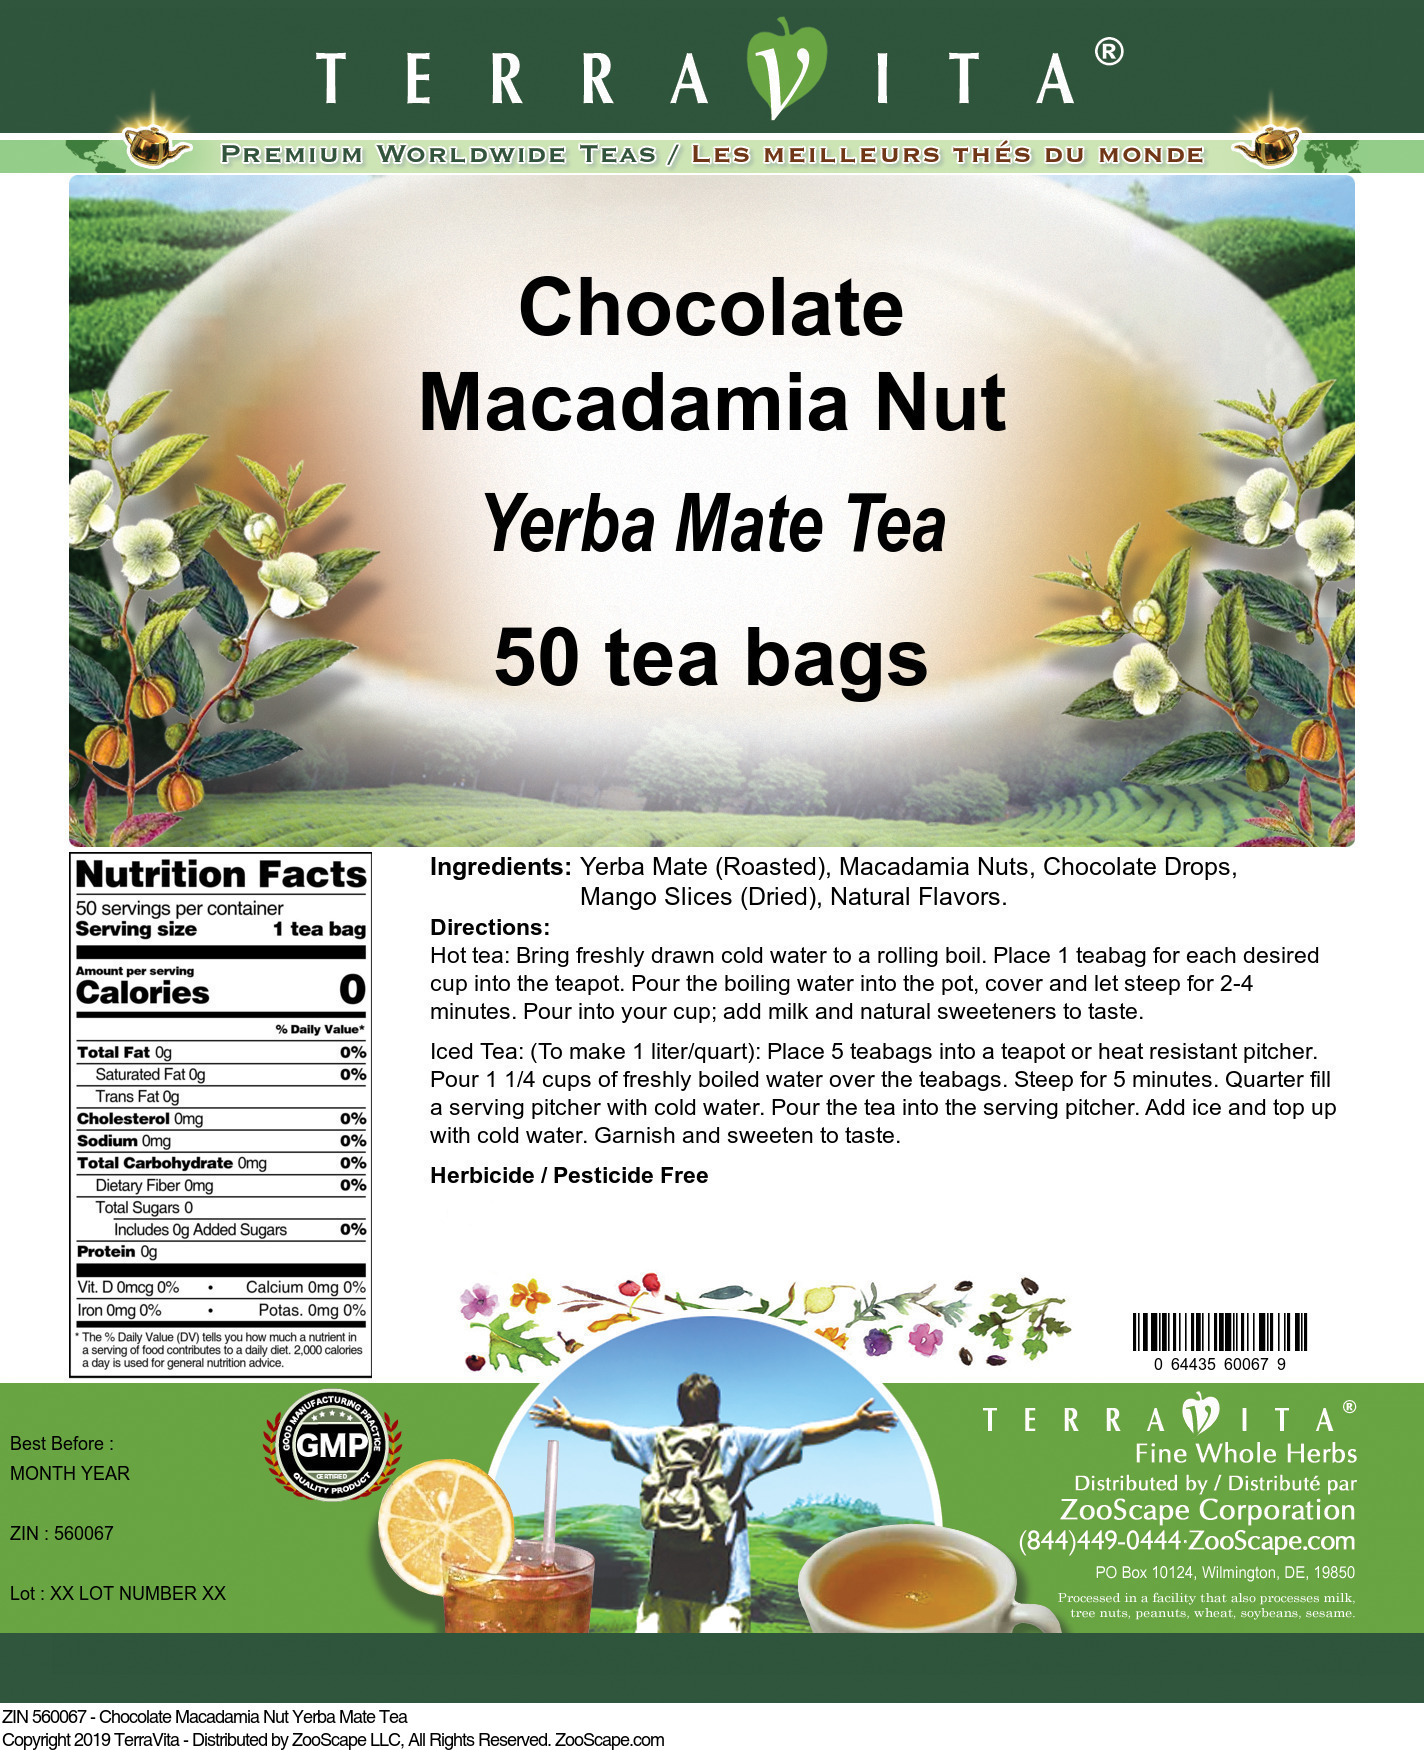 Chocolate Macadamia Nut Yerba Mate Tea - Label